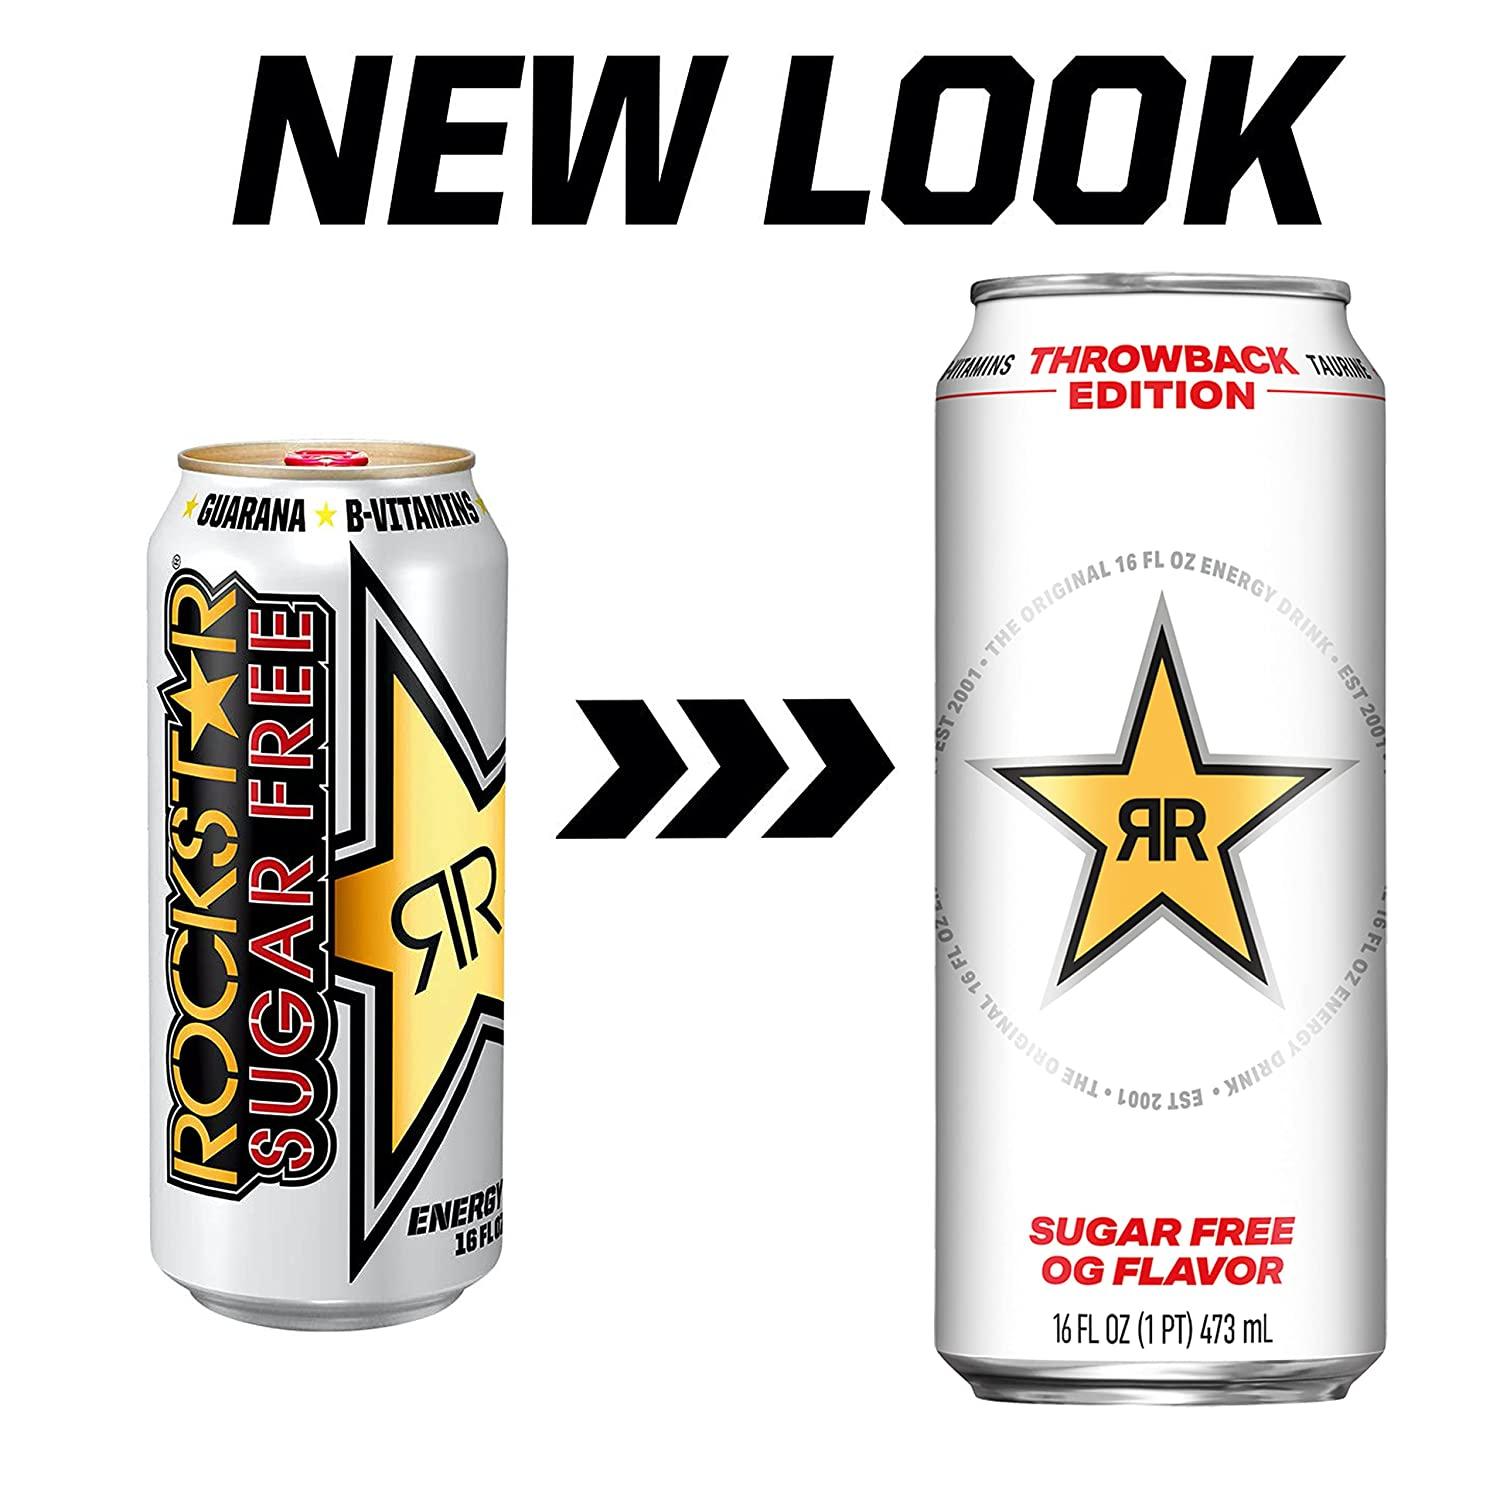 Rockstar Original Energy Drink, 16 fl oz